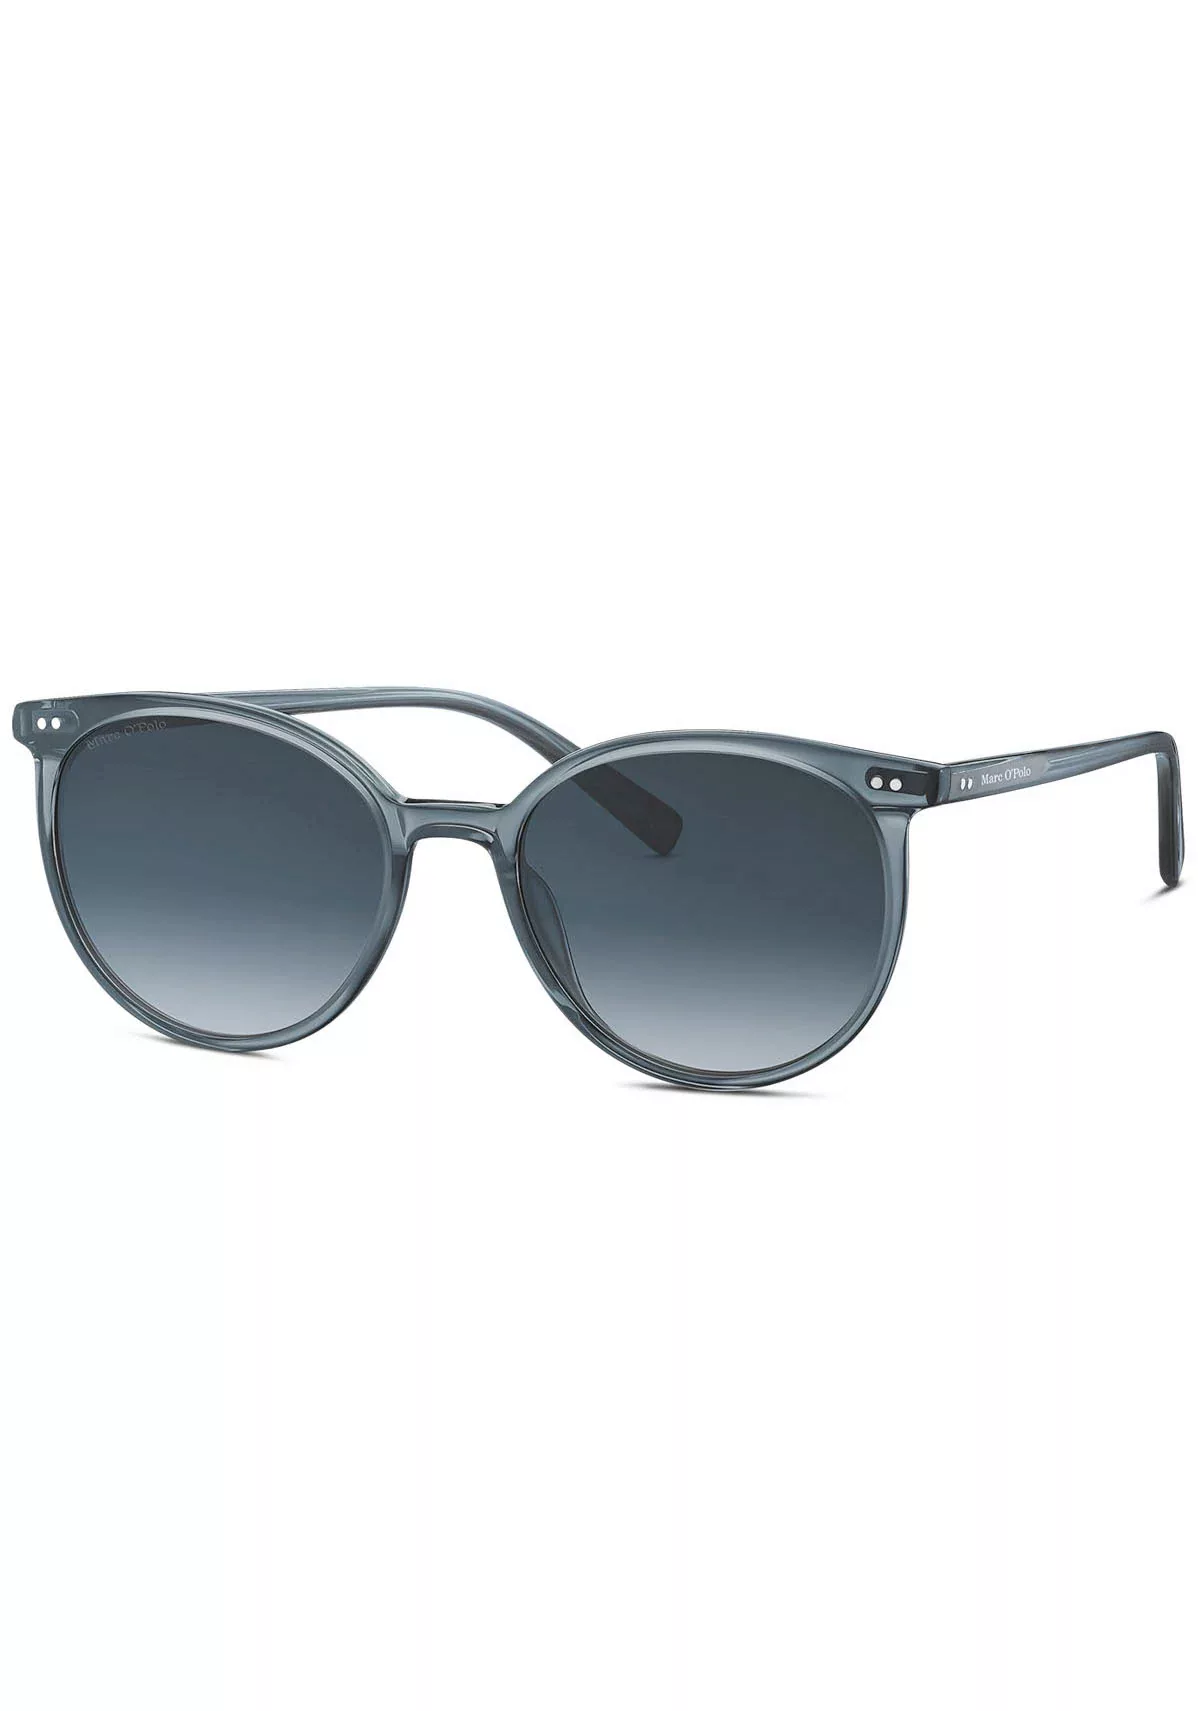 Marc OPolo Sonnenbrille "Modell 506164", Panto-Form günstig online kaufen